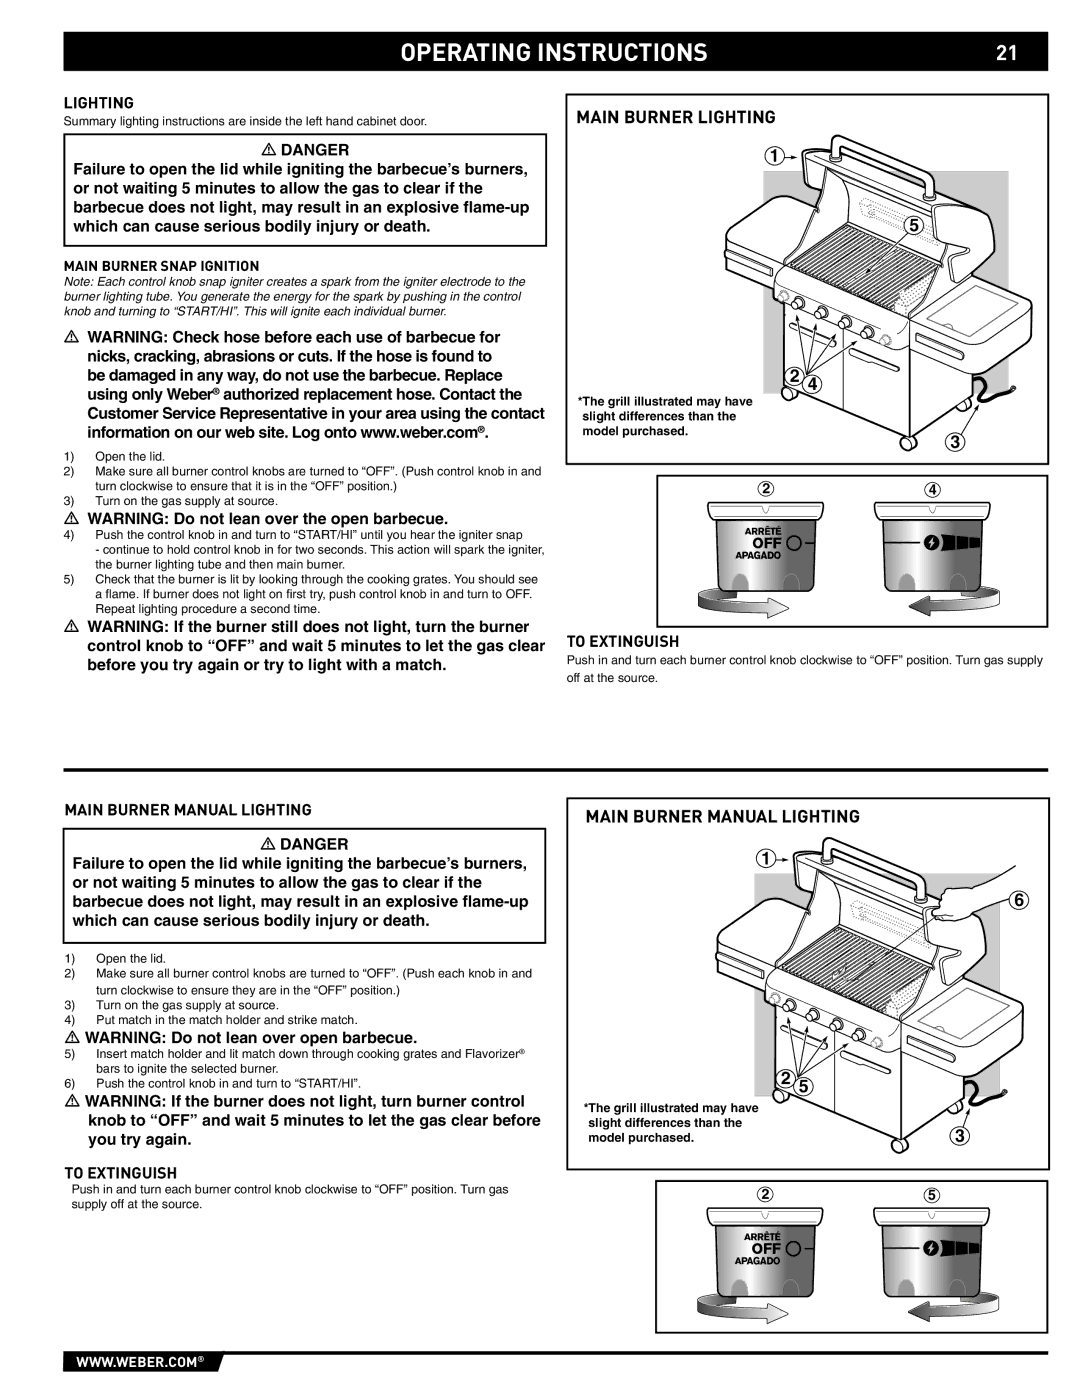 Weber 89561 manual To Extinguish, Main Burner Manual Lighting, Main Burner Snap Ignition 